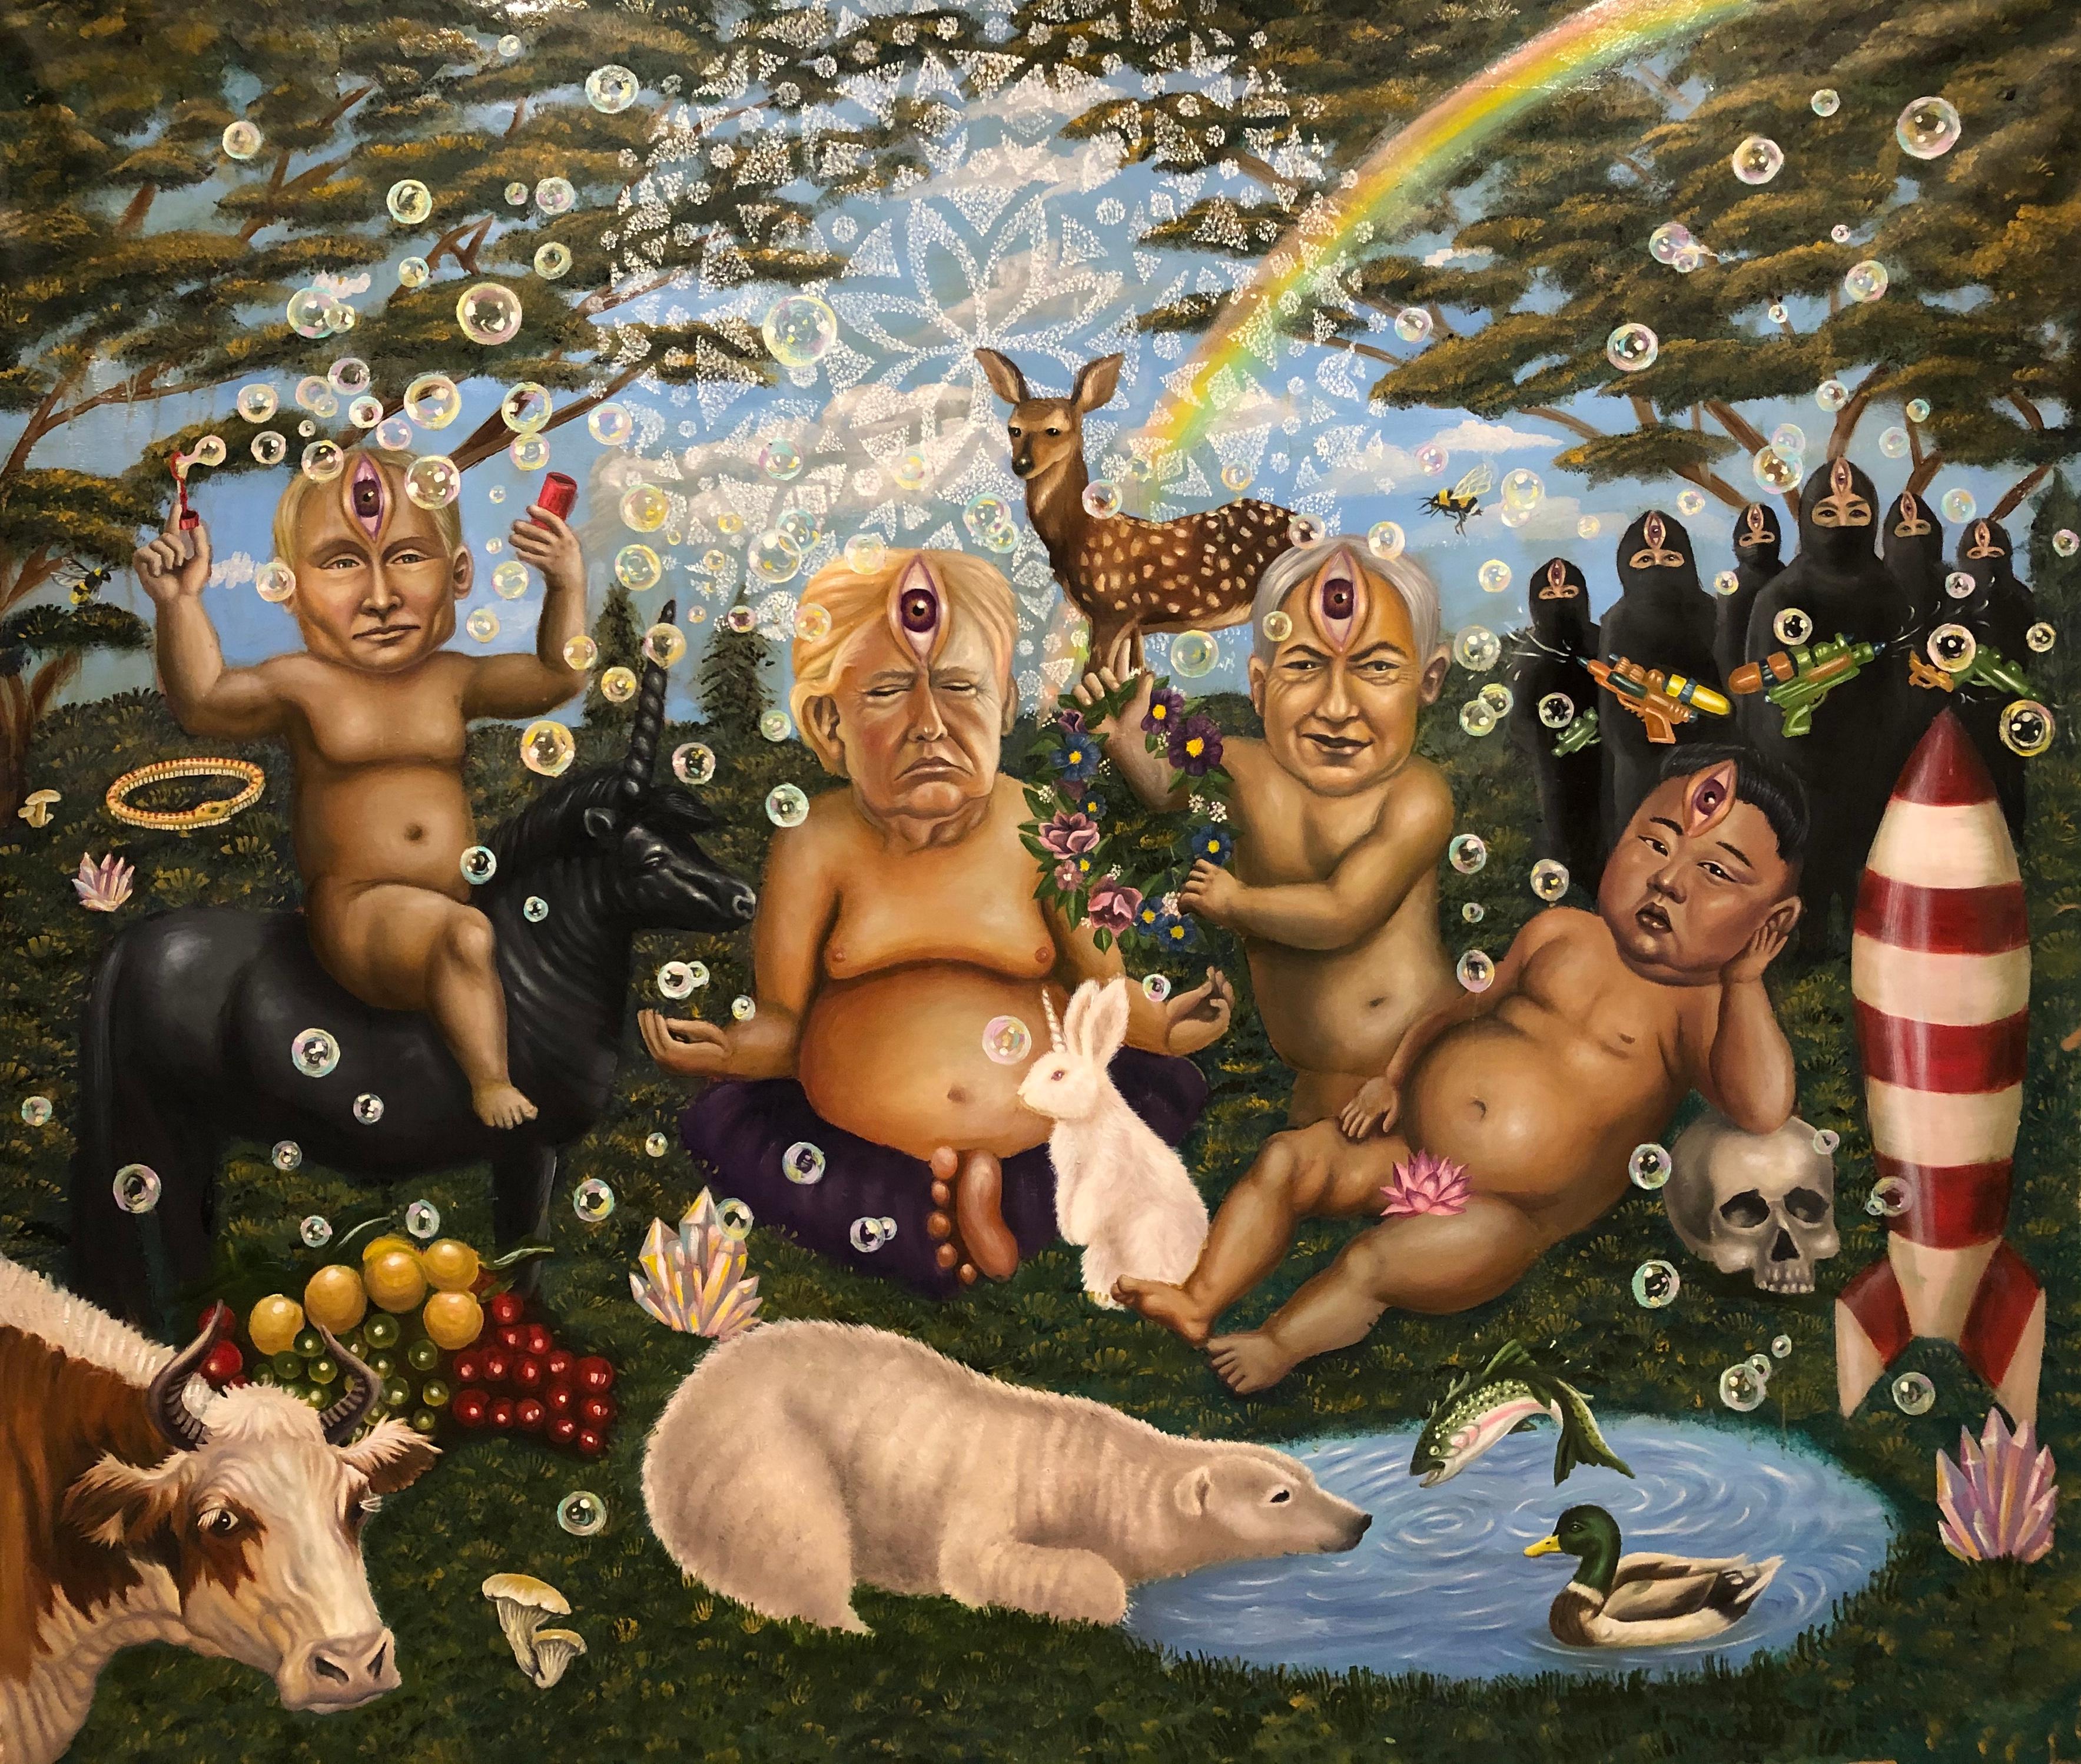 "CHILDREN OF THE SUN", oil painting, axis politics, garden, fantasy, allegory